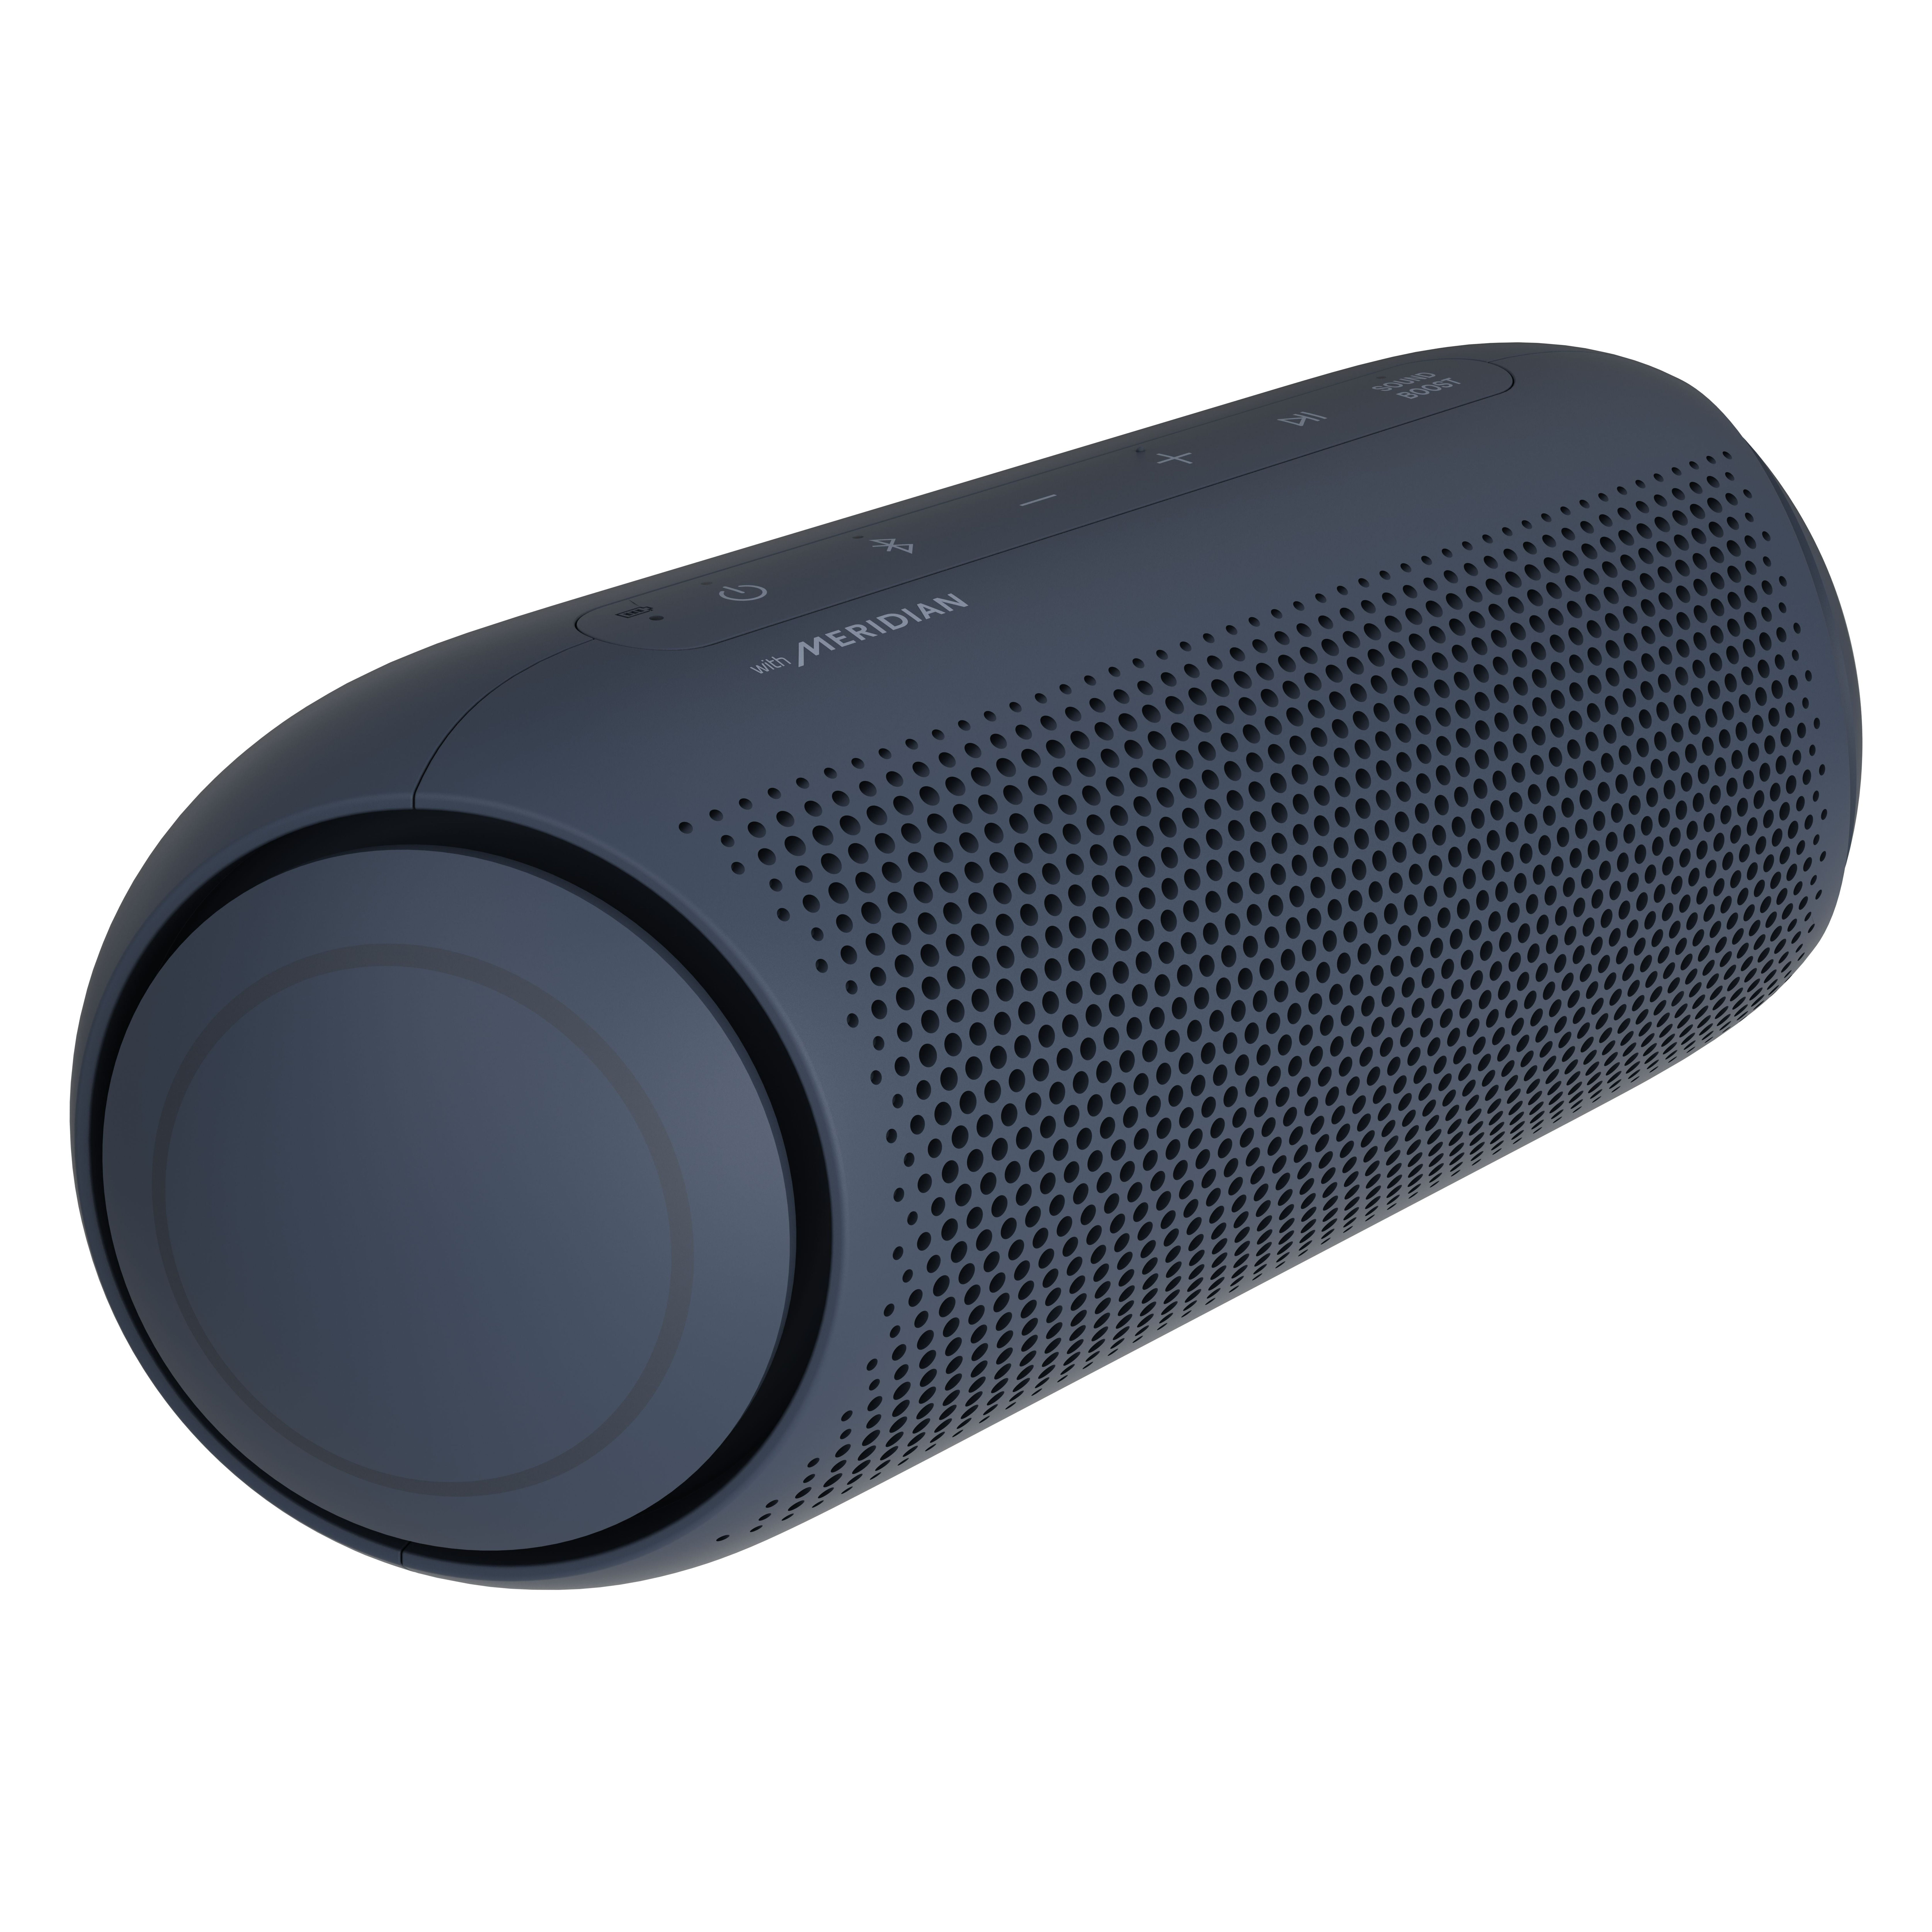 LG Portable Bluetooth Speaker with LED Lighting, Black, PL5 - image 4 of 29